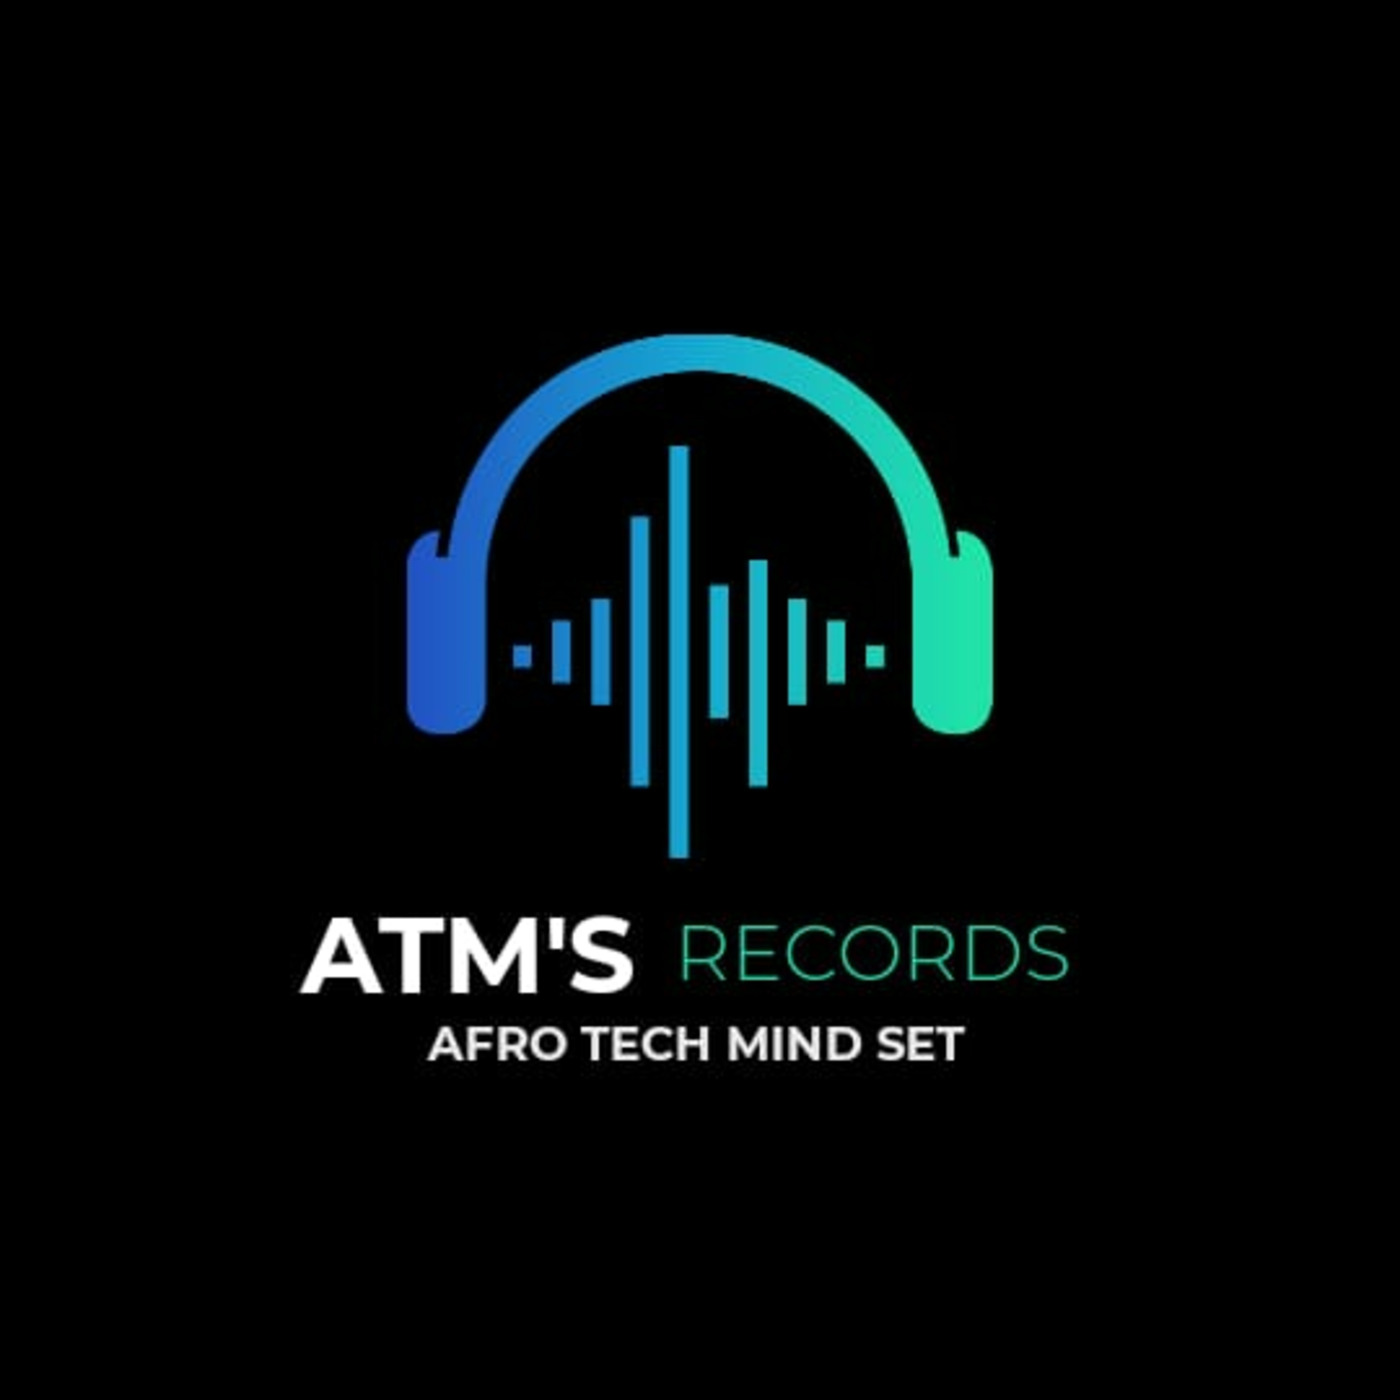 Episode 31: AFRO TECH MIND SET #031 - Festive Selections (Compiled BY BlvckMist)[ATM'S_Records]